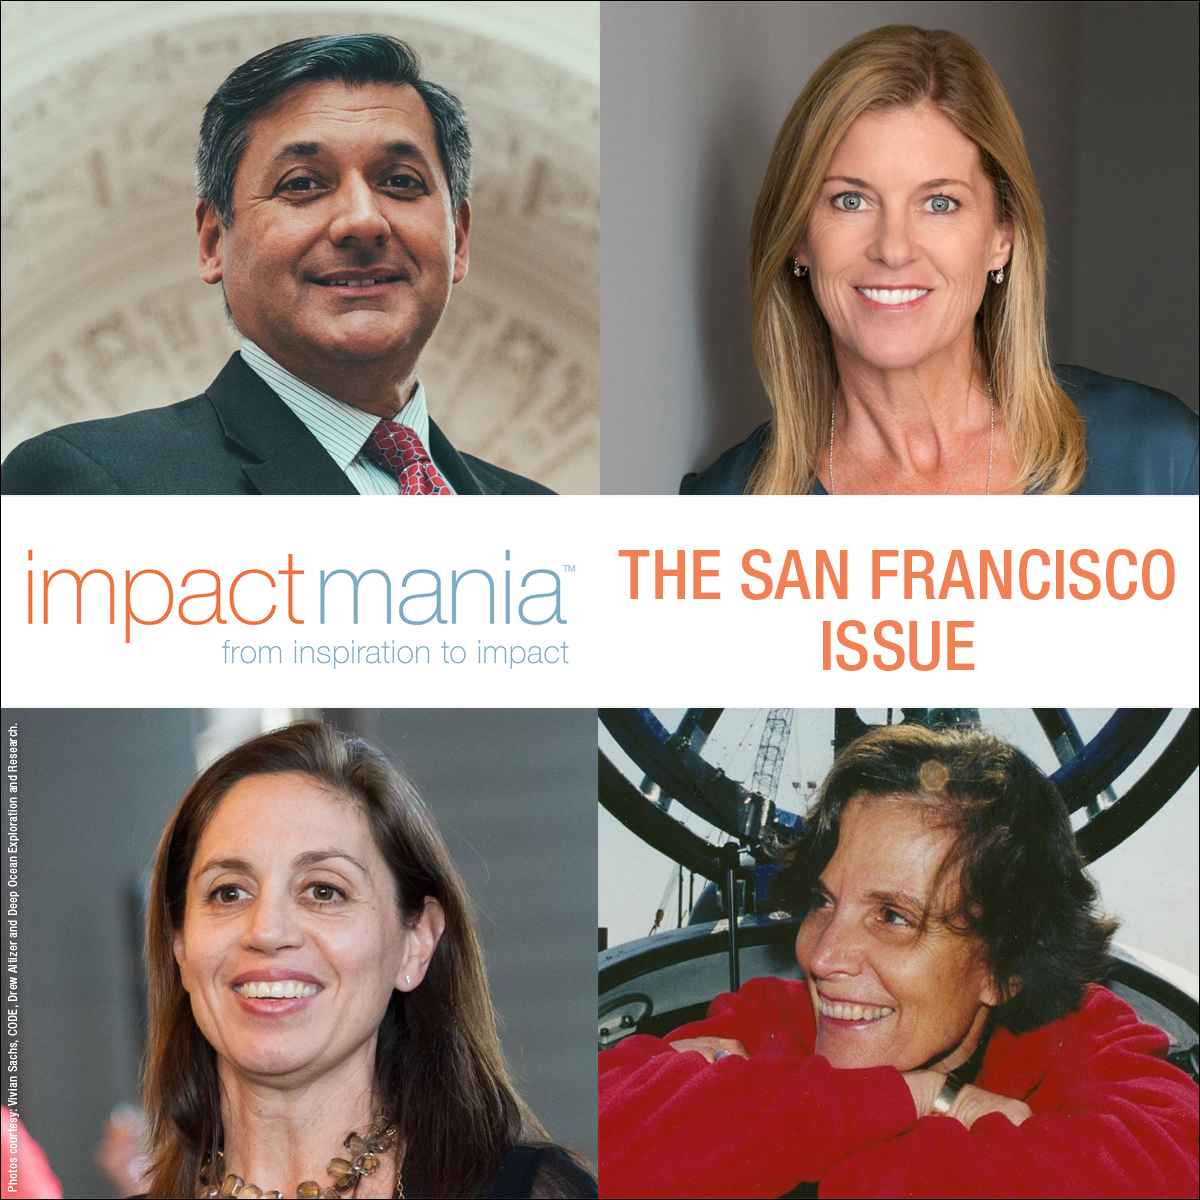 impactmania is in San Francisco!